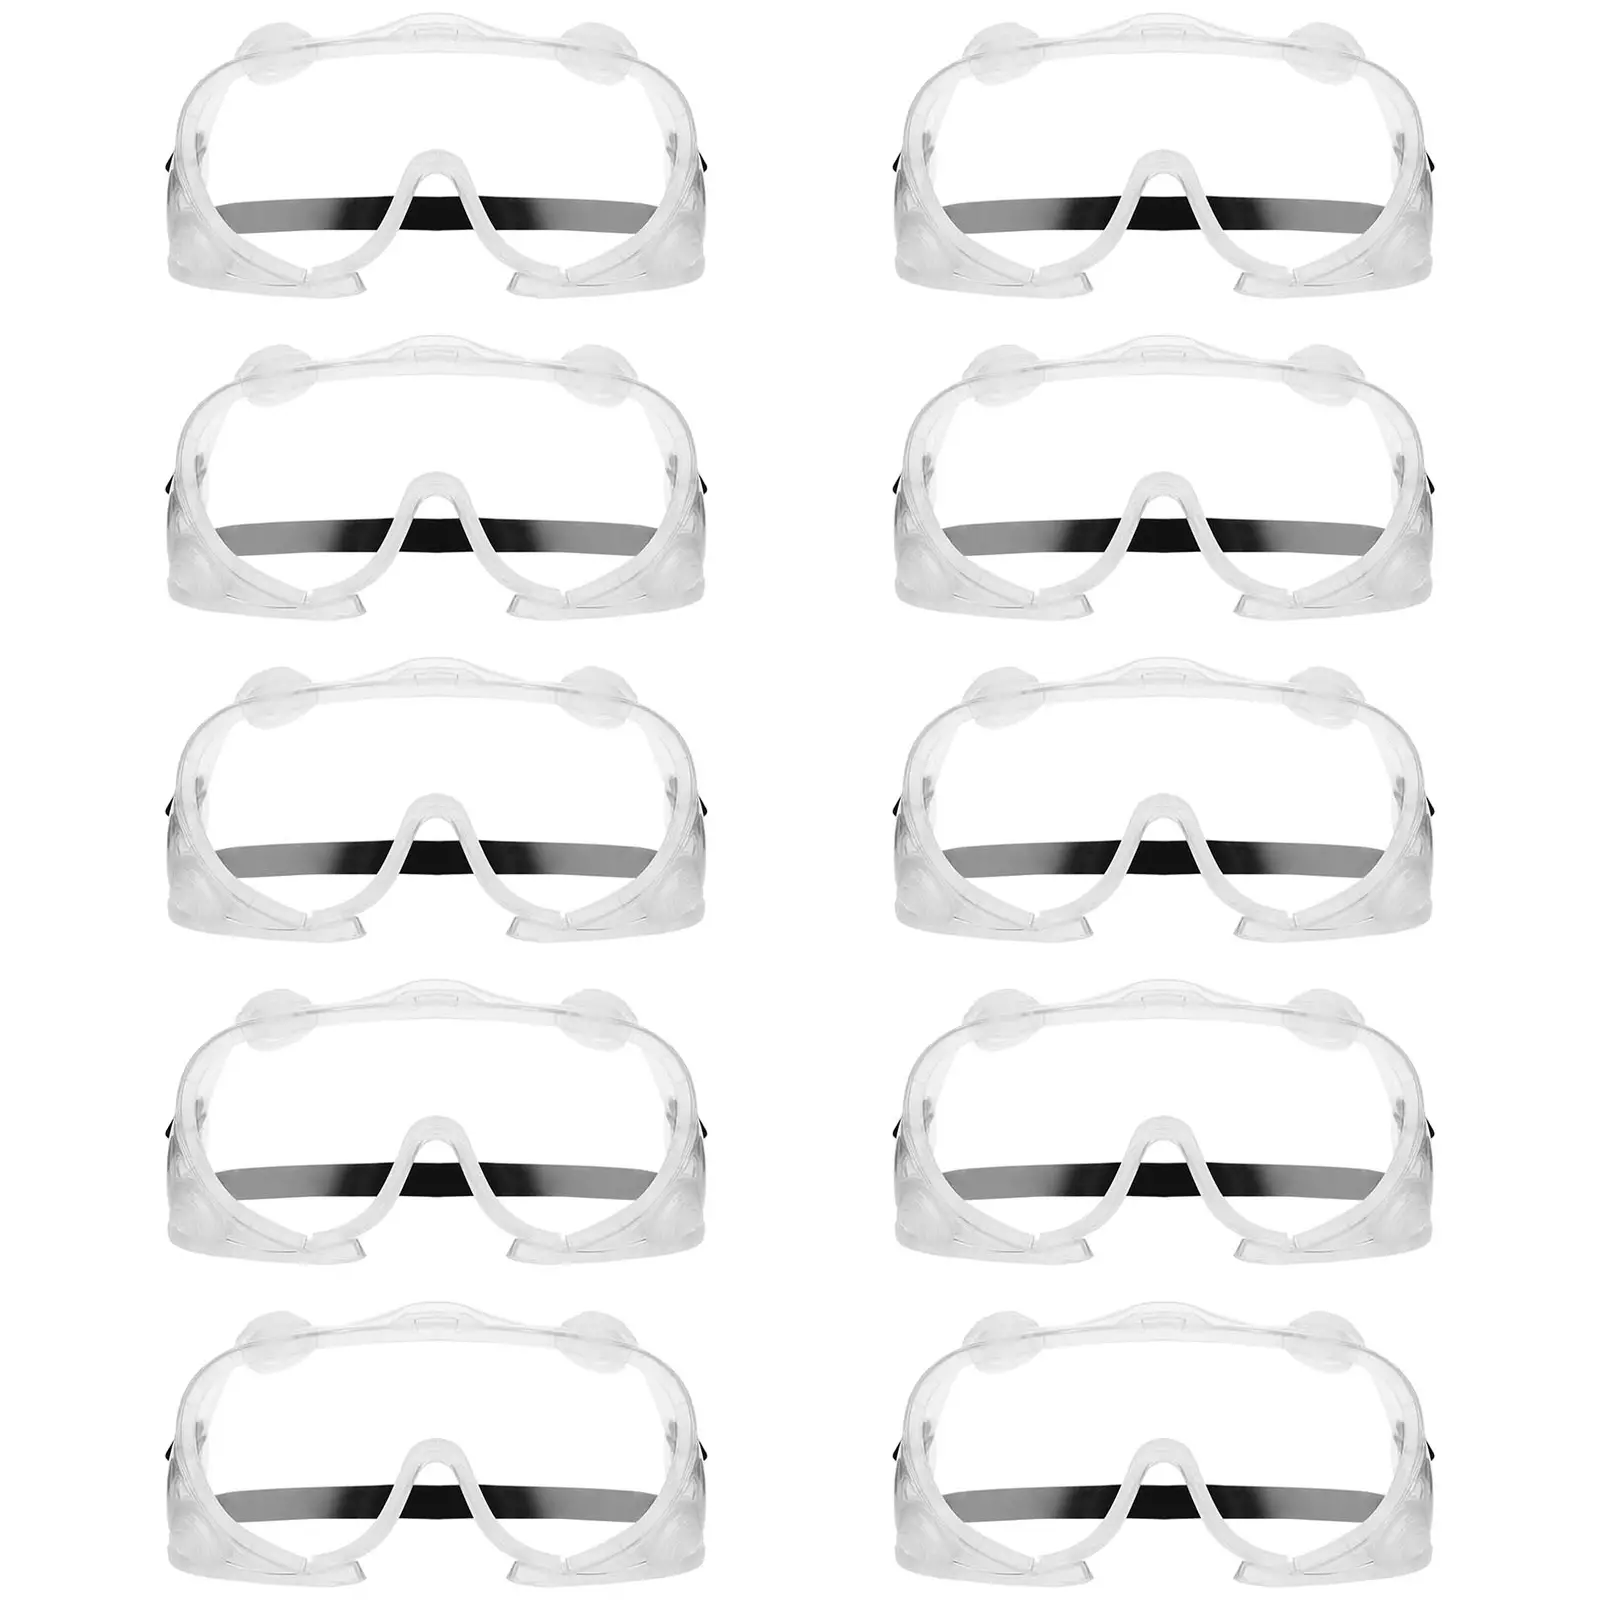 Gafas de seguridad - set de 10 - transparentes - talla única